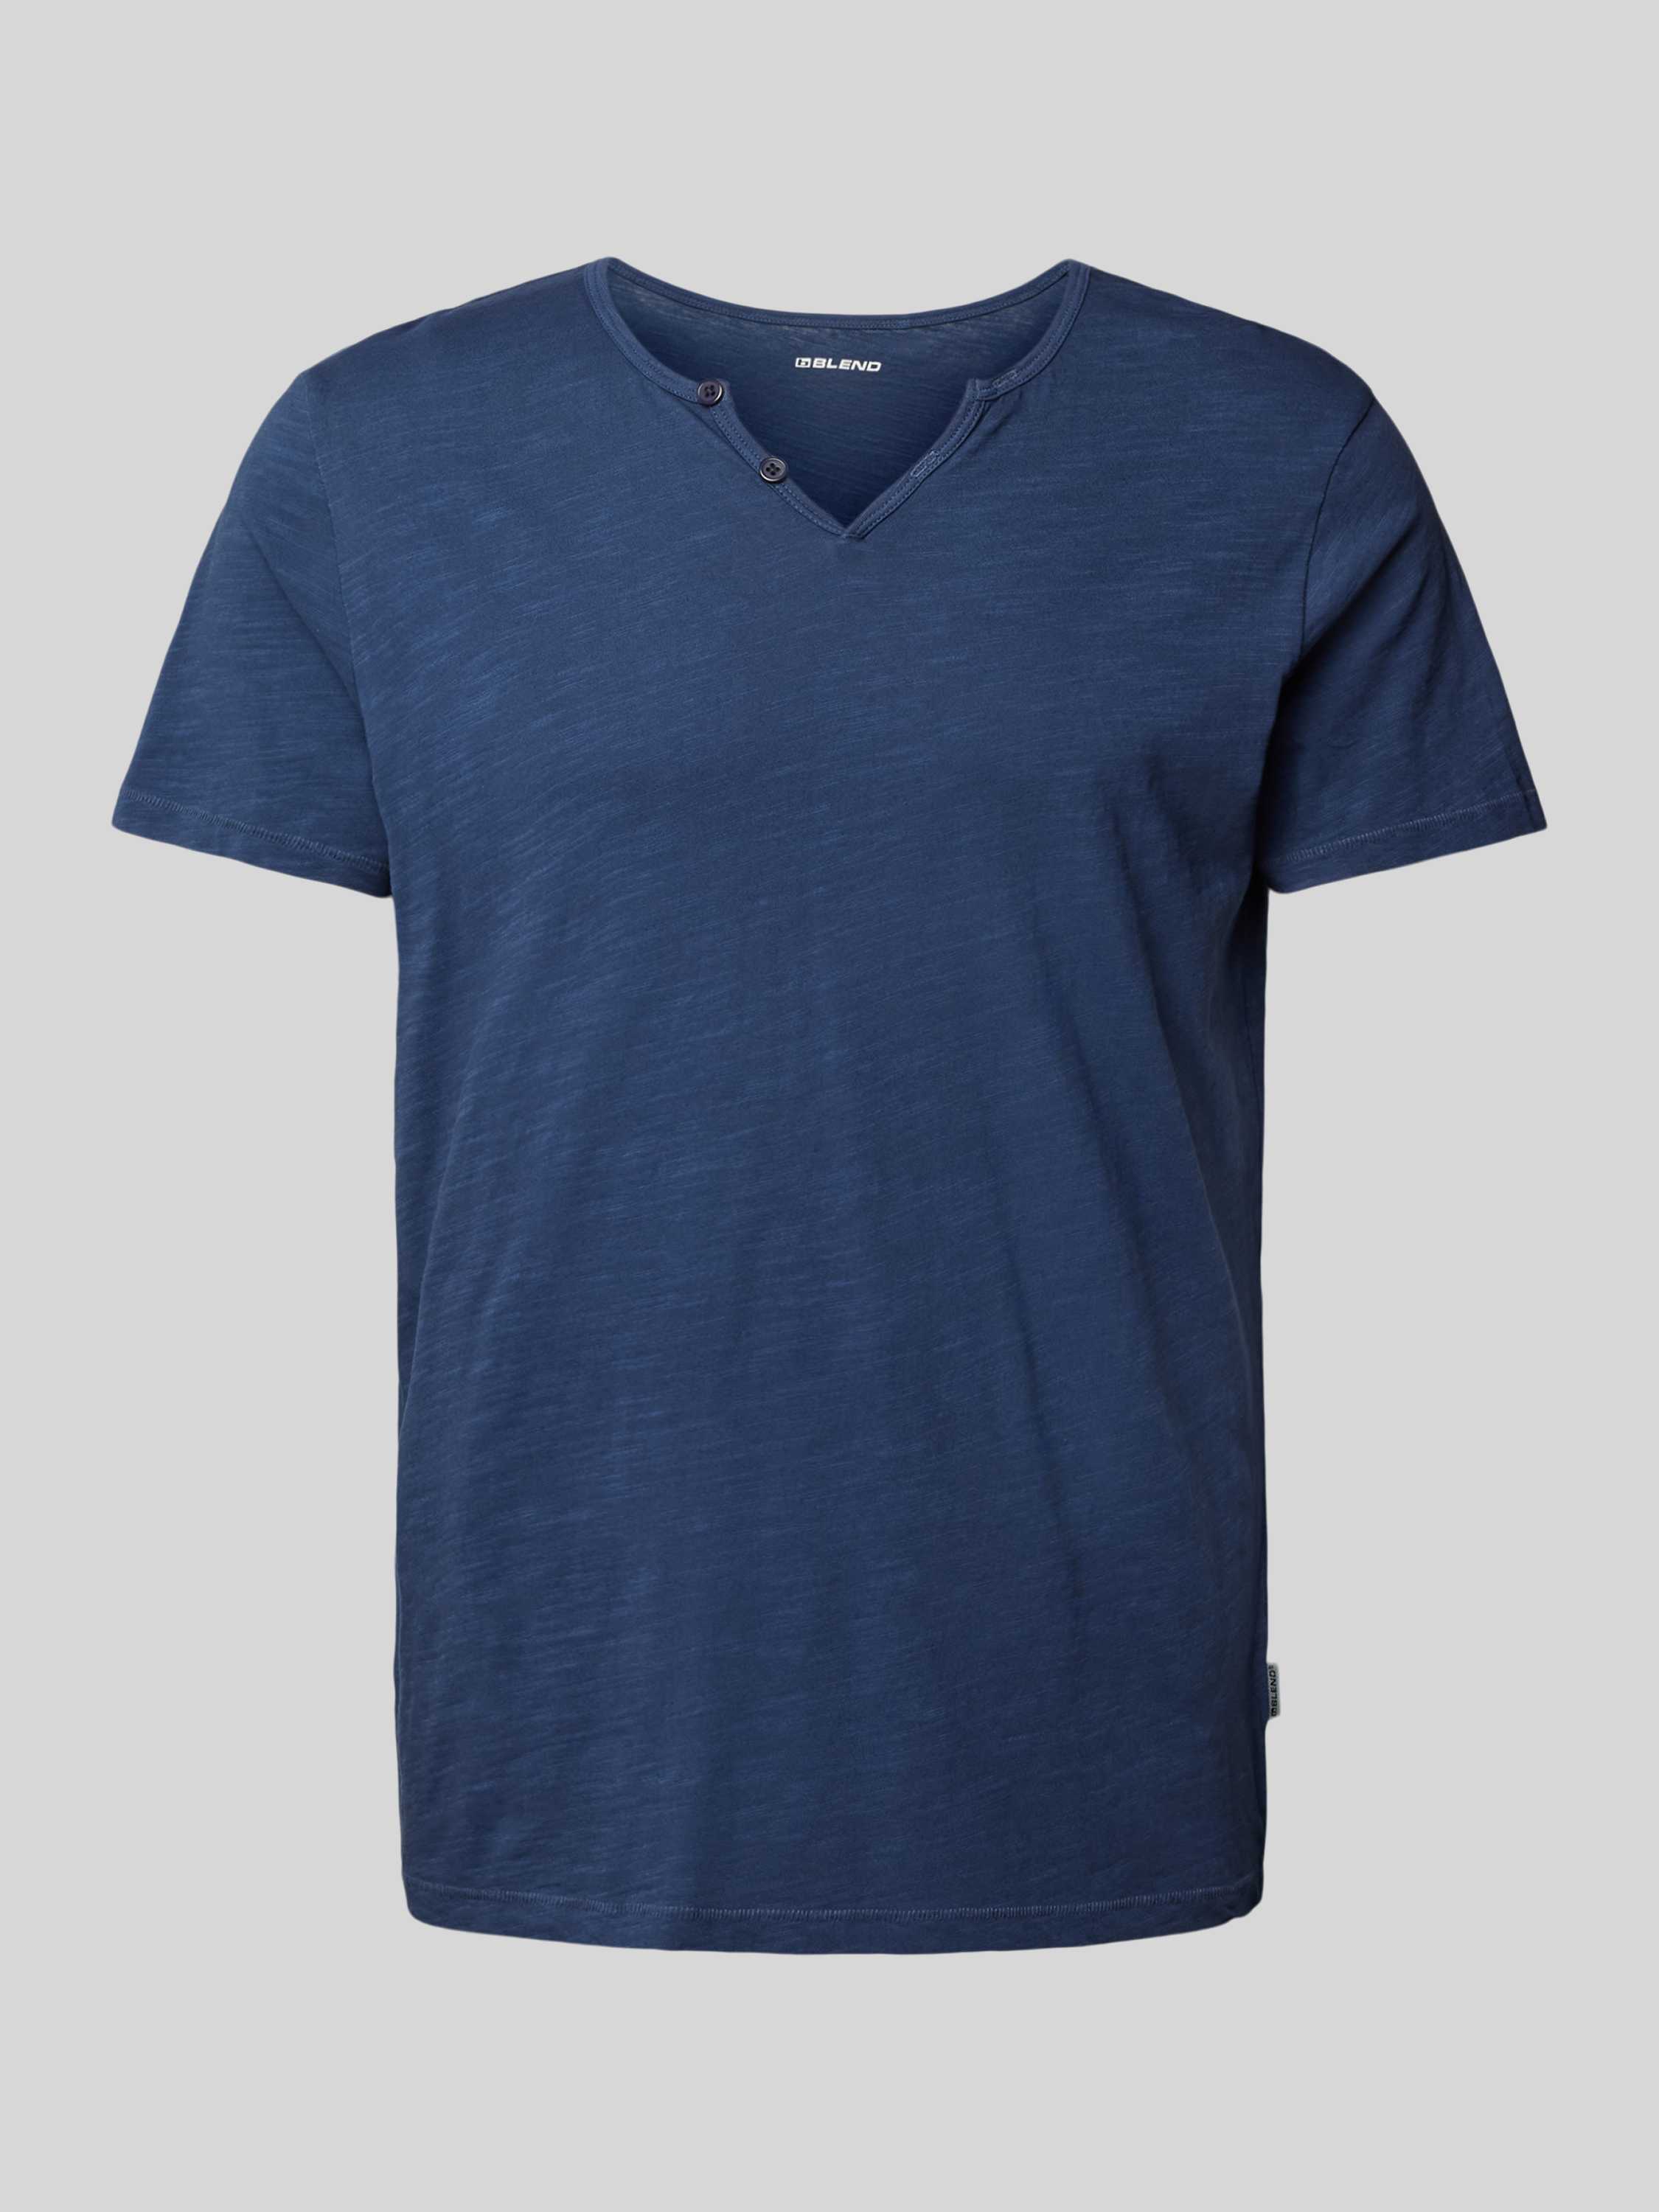 T-Shirt in Melange-Optik Modell 'NOOS'